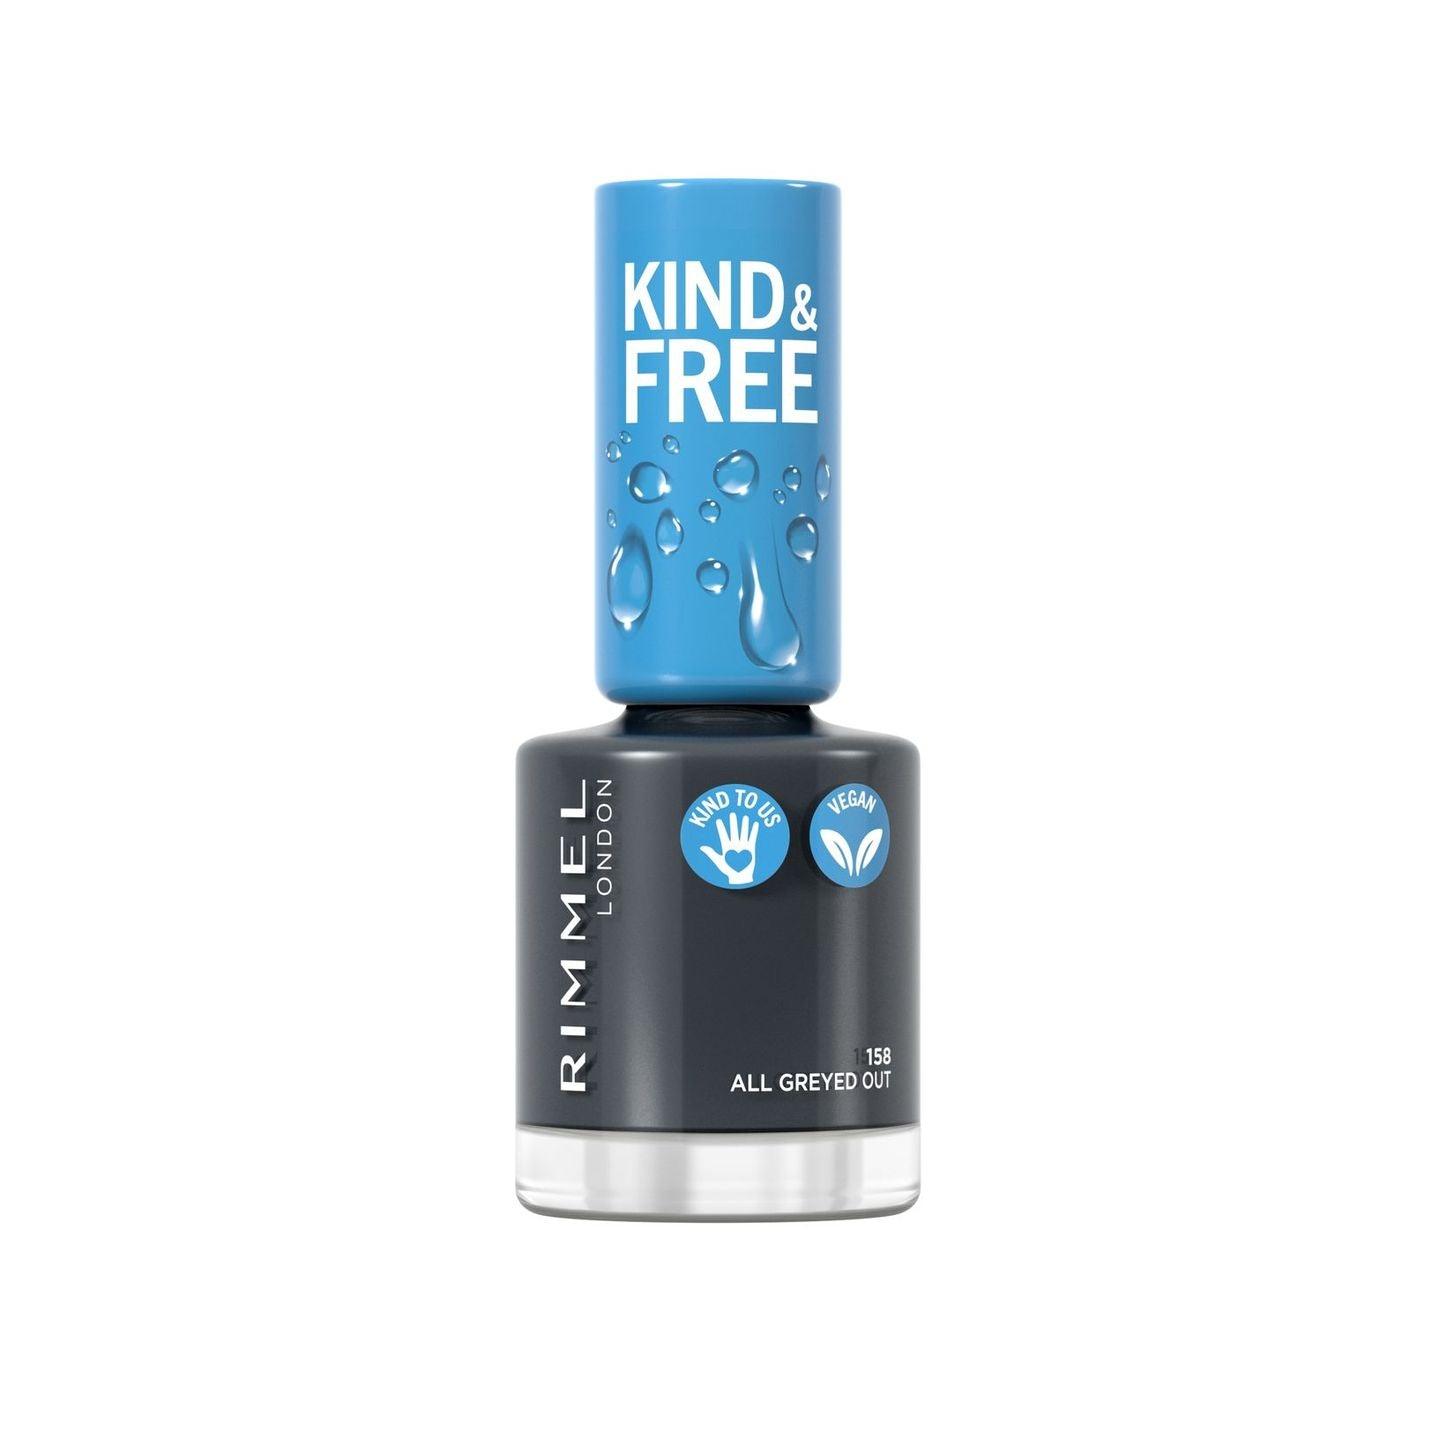 Rimmel London Kind & Free Nail Polish 8 ML 158 ALLGREYED OUT IV - Beauty Bounty